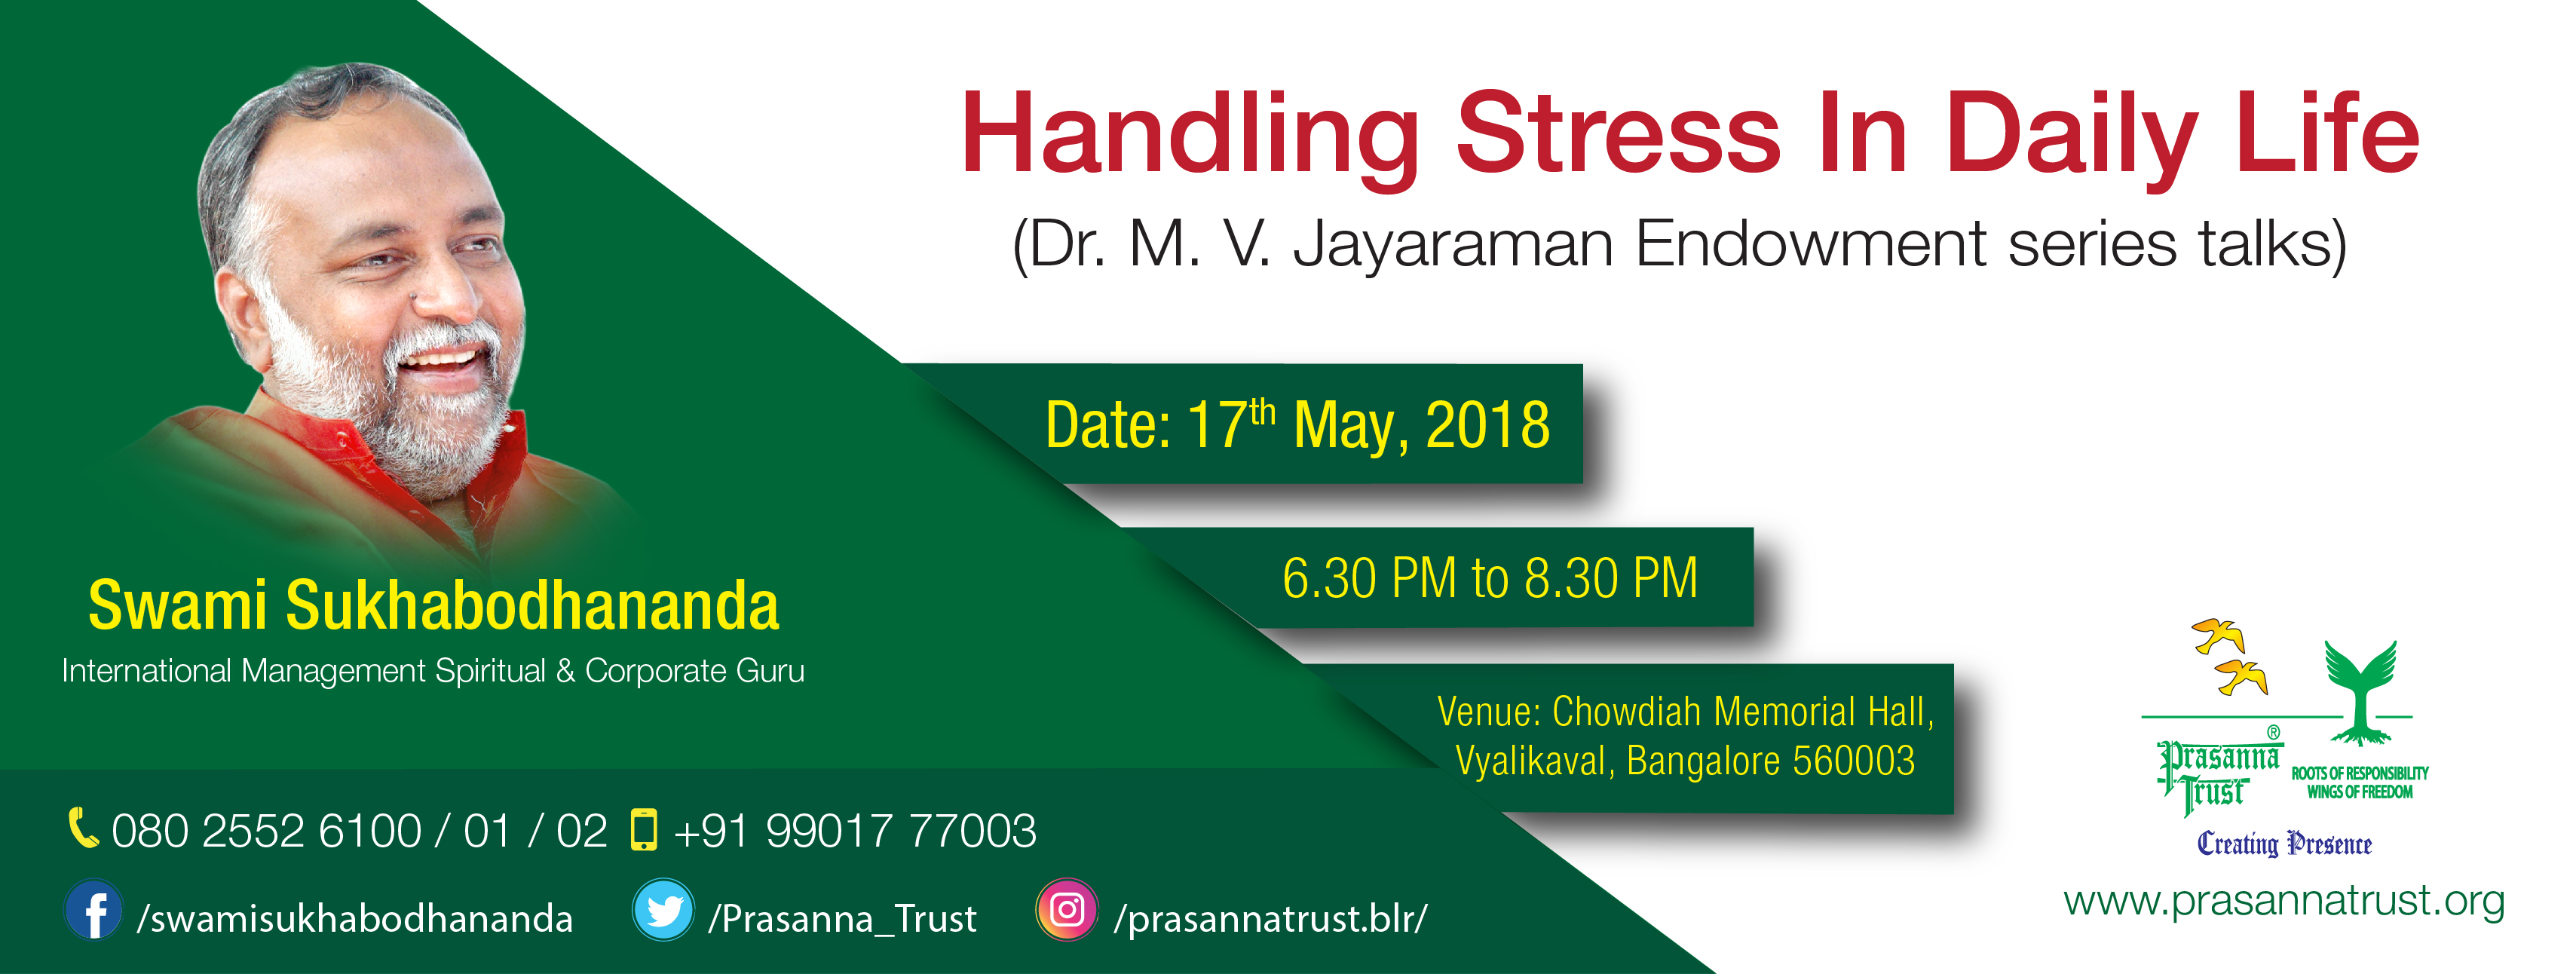 Handling Stress In Daily Life, Bangalore, Karnataka, India